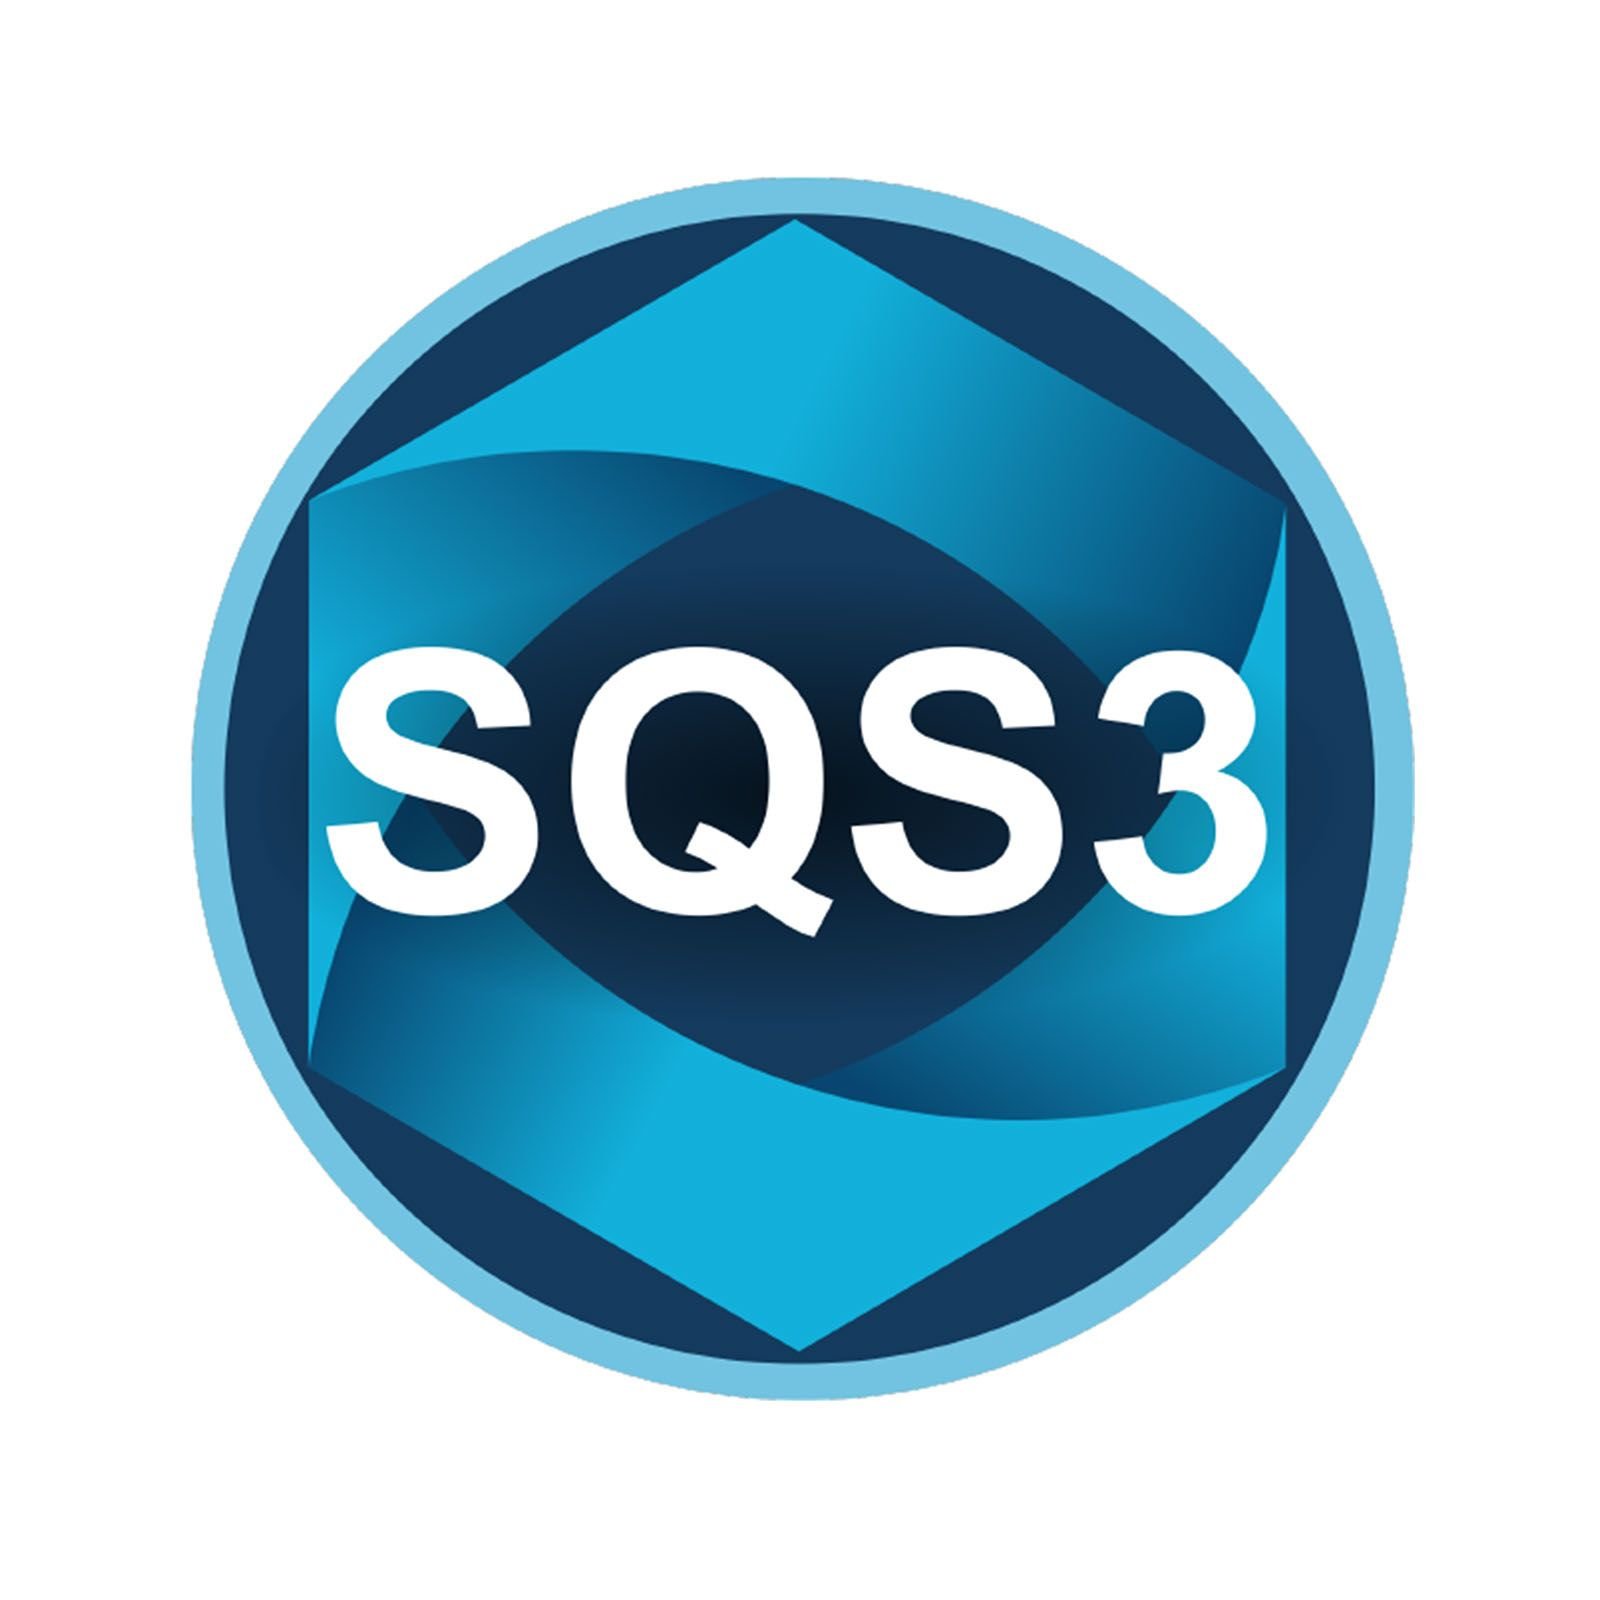 SQS3 Std Edition License 1pcs product photo